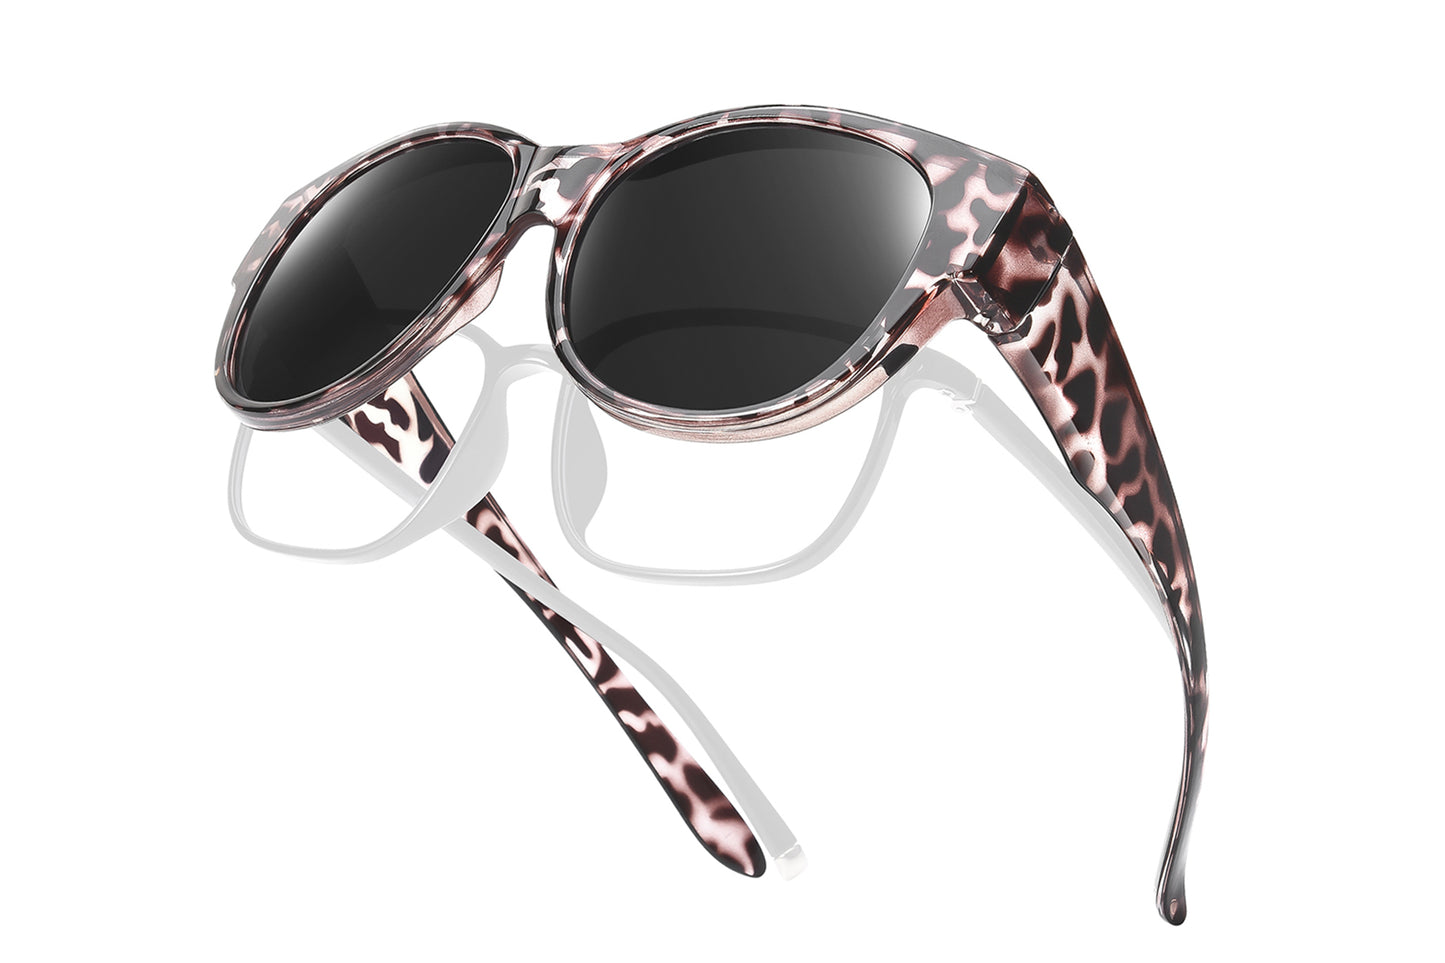 Fit Over Glasses Sunglasses丨Cat Eye丨Polarized 100% UV400 Protection丨5779